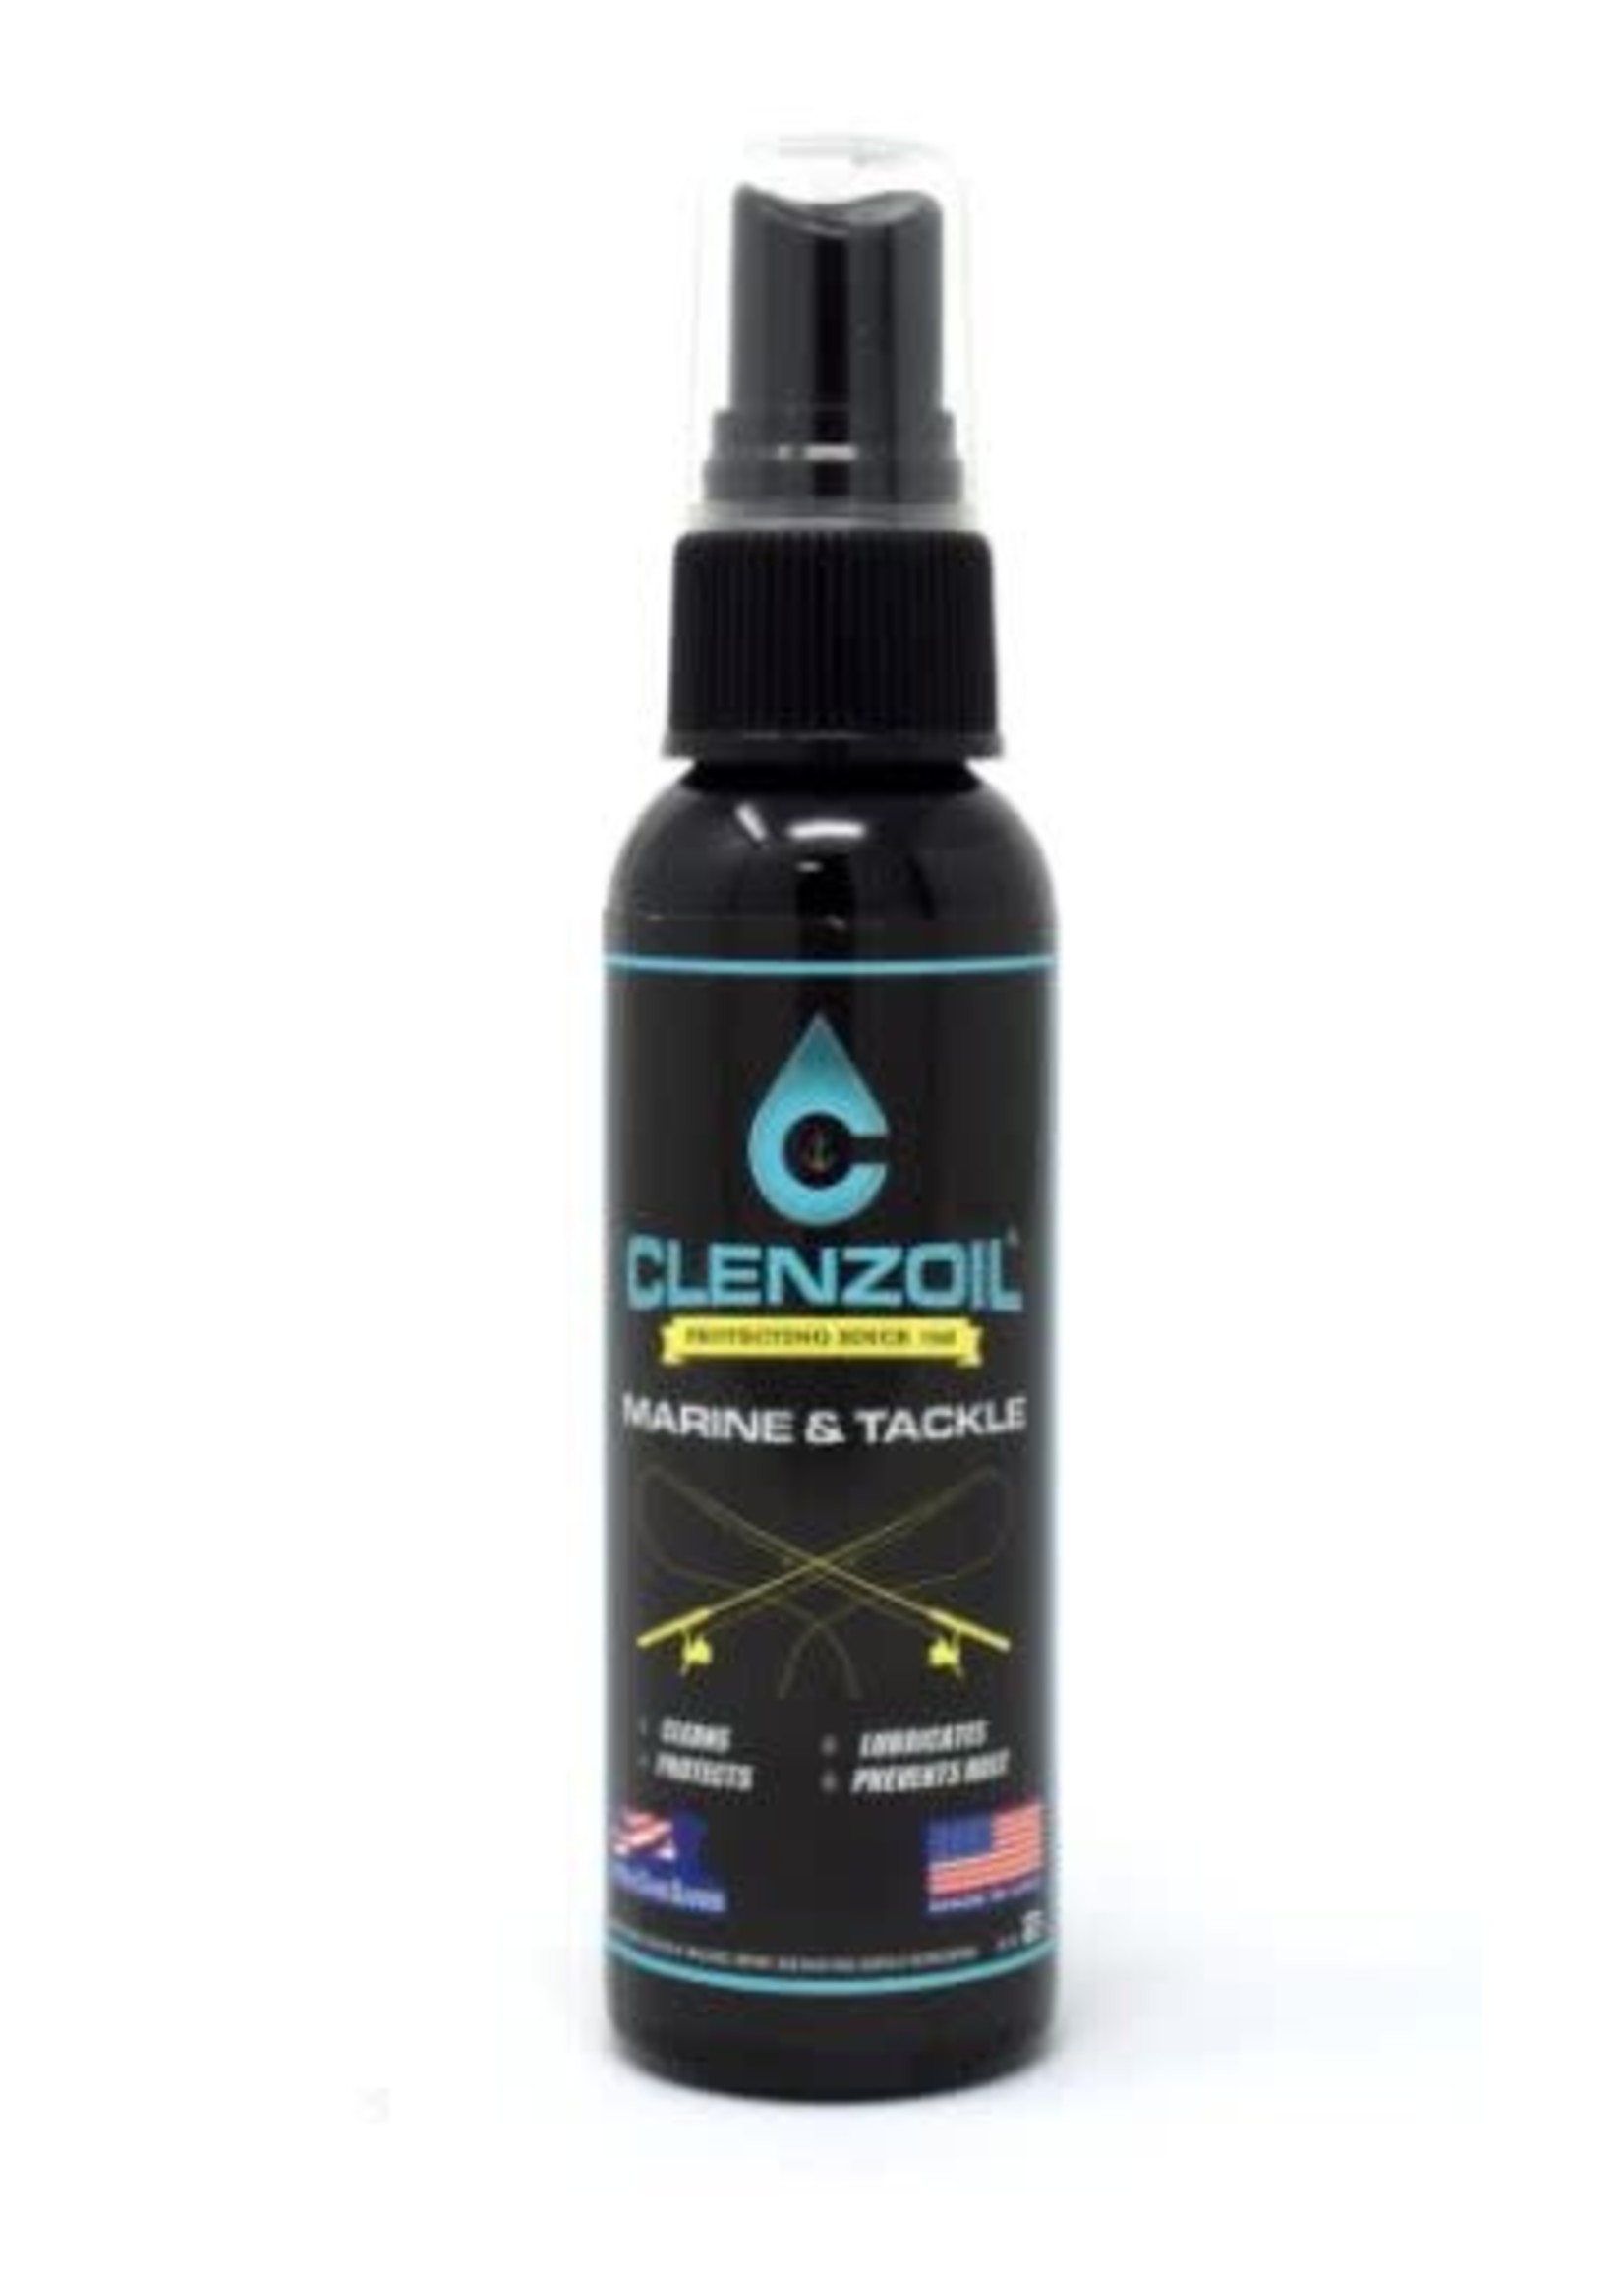 Clenzoil Marine & Tackle Pump Spray 2oz